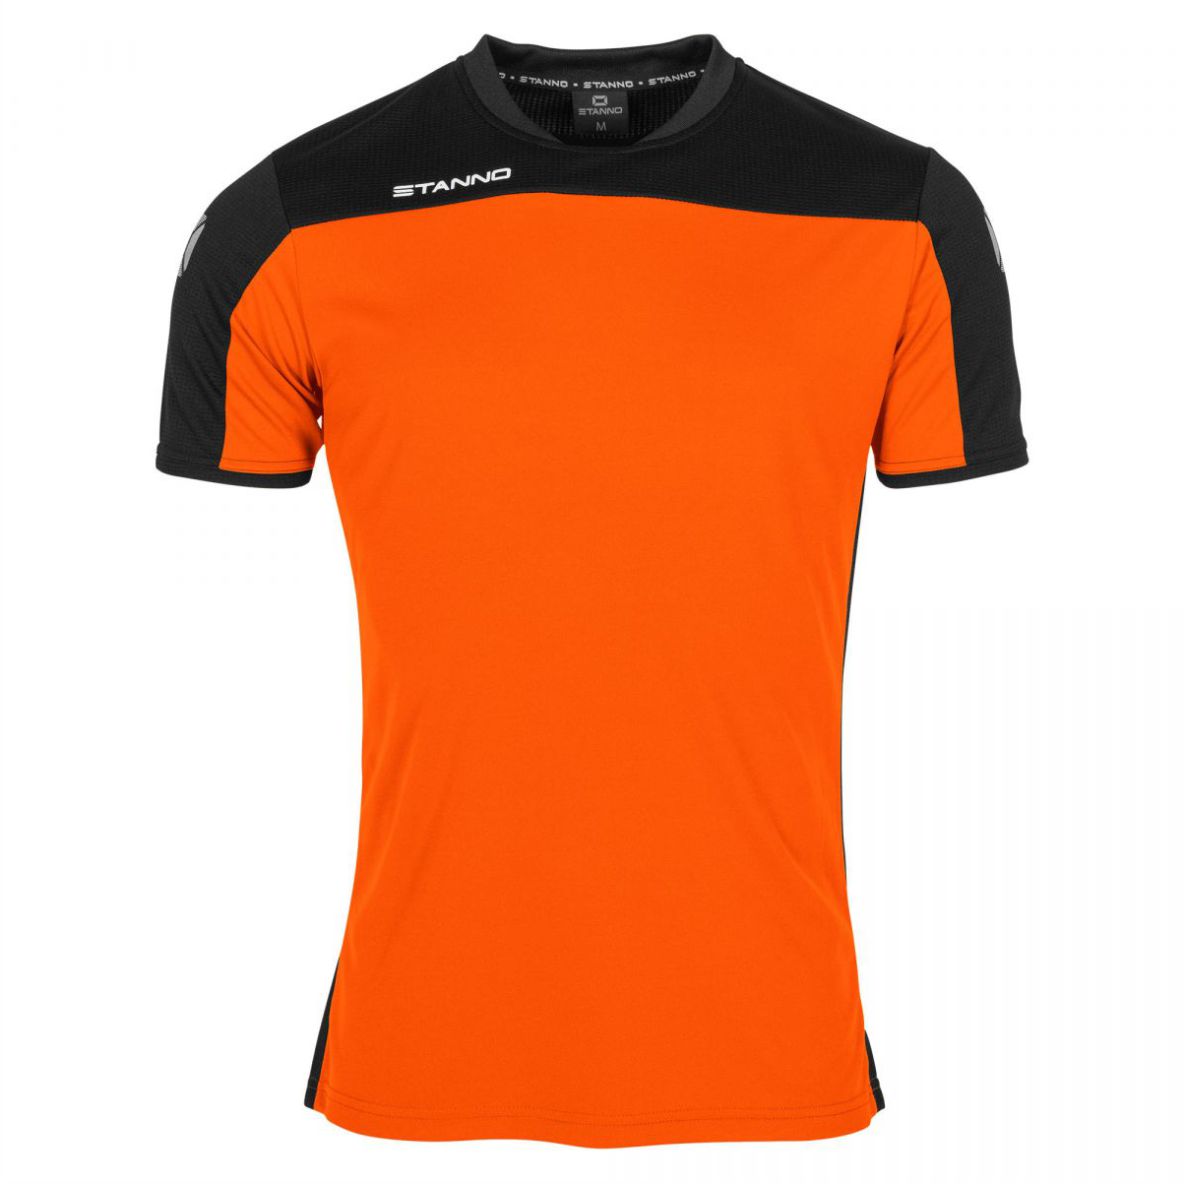 Stanno - Pride Shirt - Orange & Black